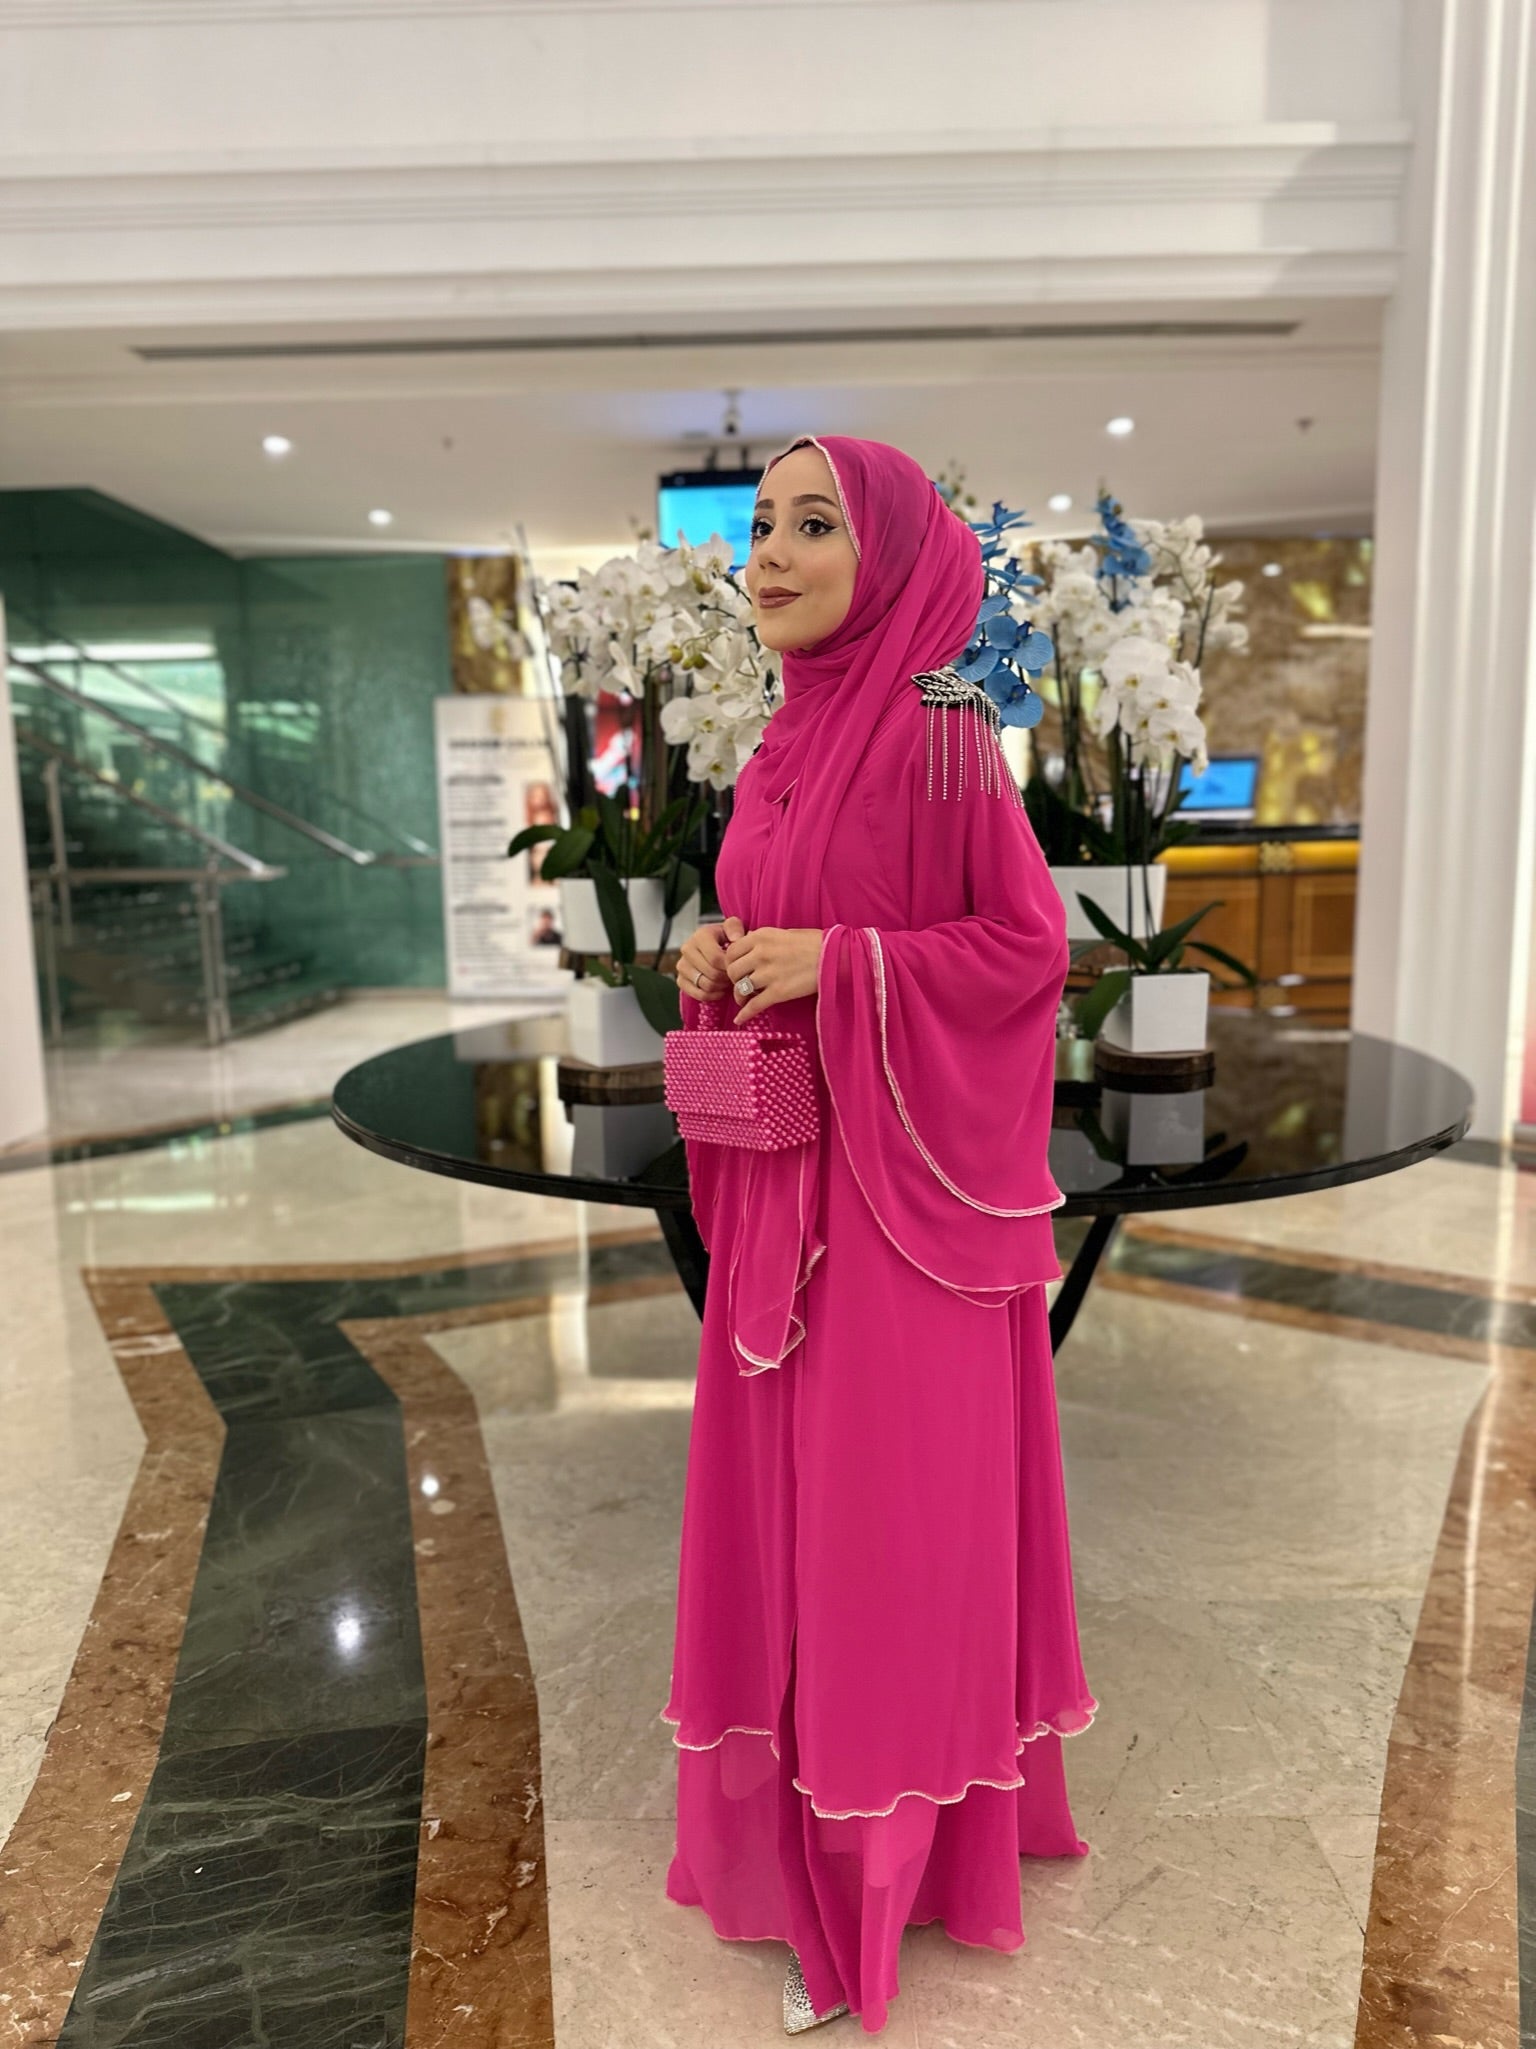 Ethereal Elegance: Two-Layer Pink Chiffon Abaya